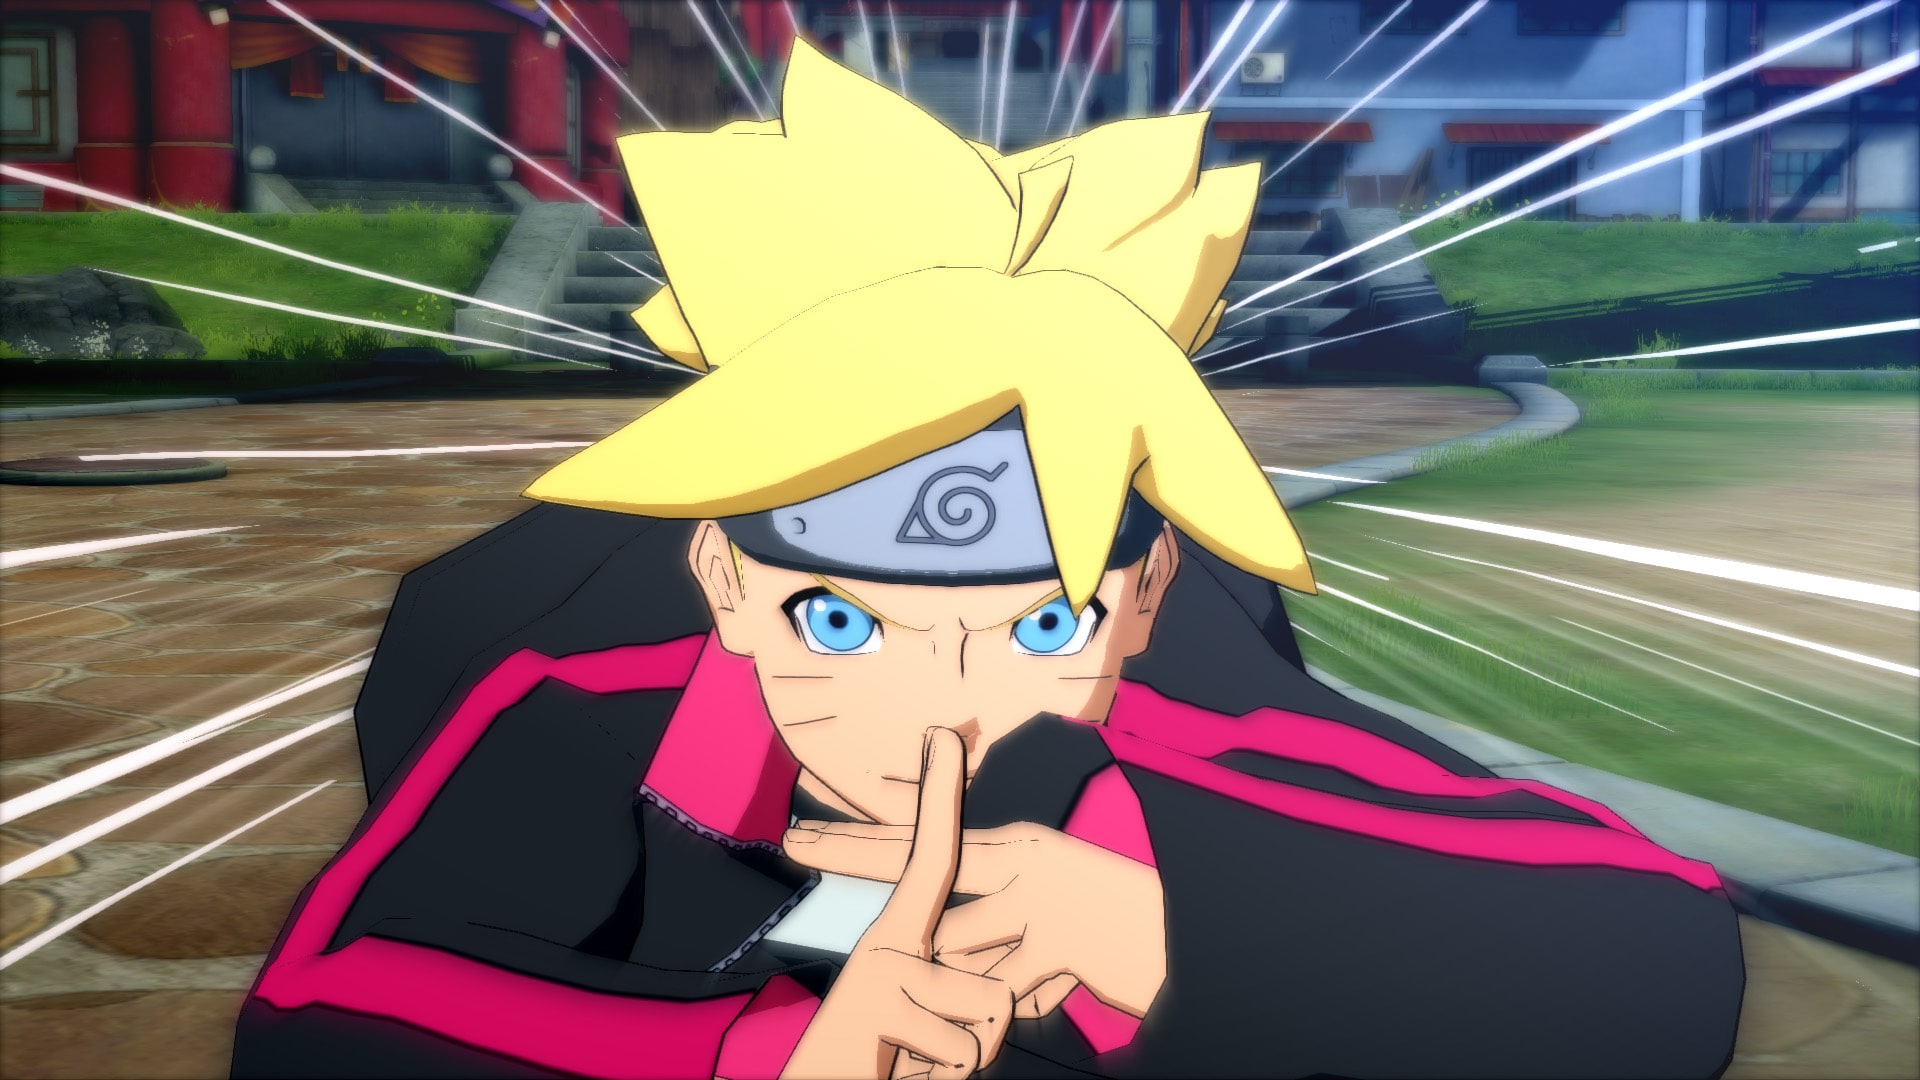 Naruto Shippuden Ultimate Ninja Storm 4 sur PlayStation 4 